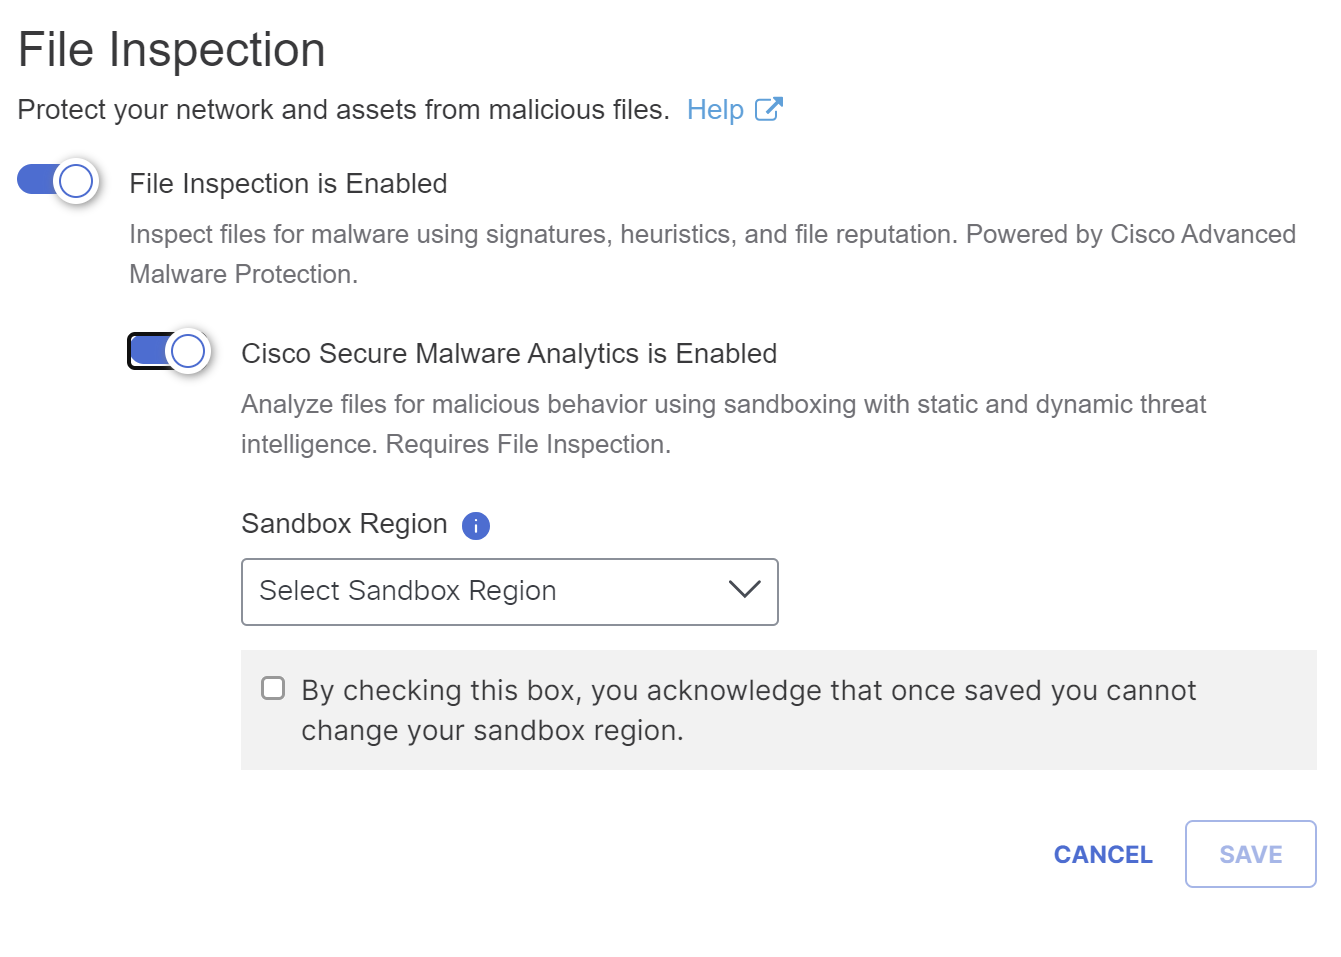 File inspection - first time, before choosing Sandbox region